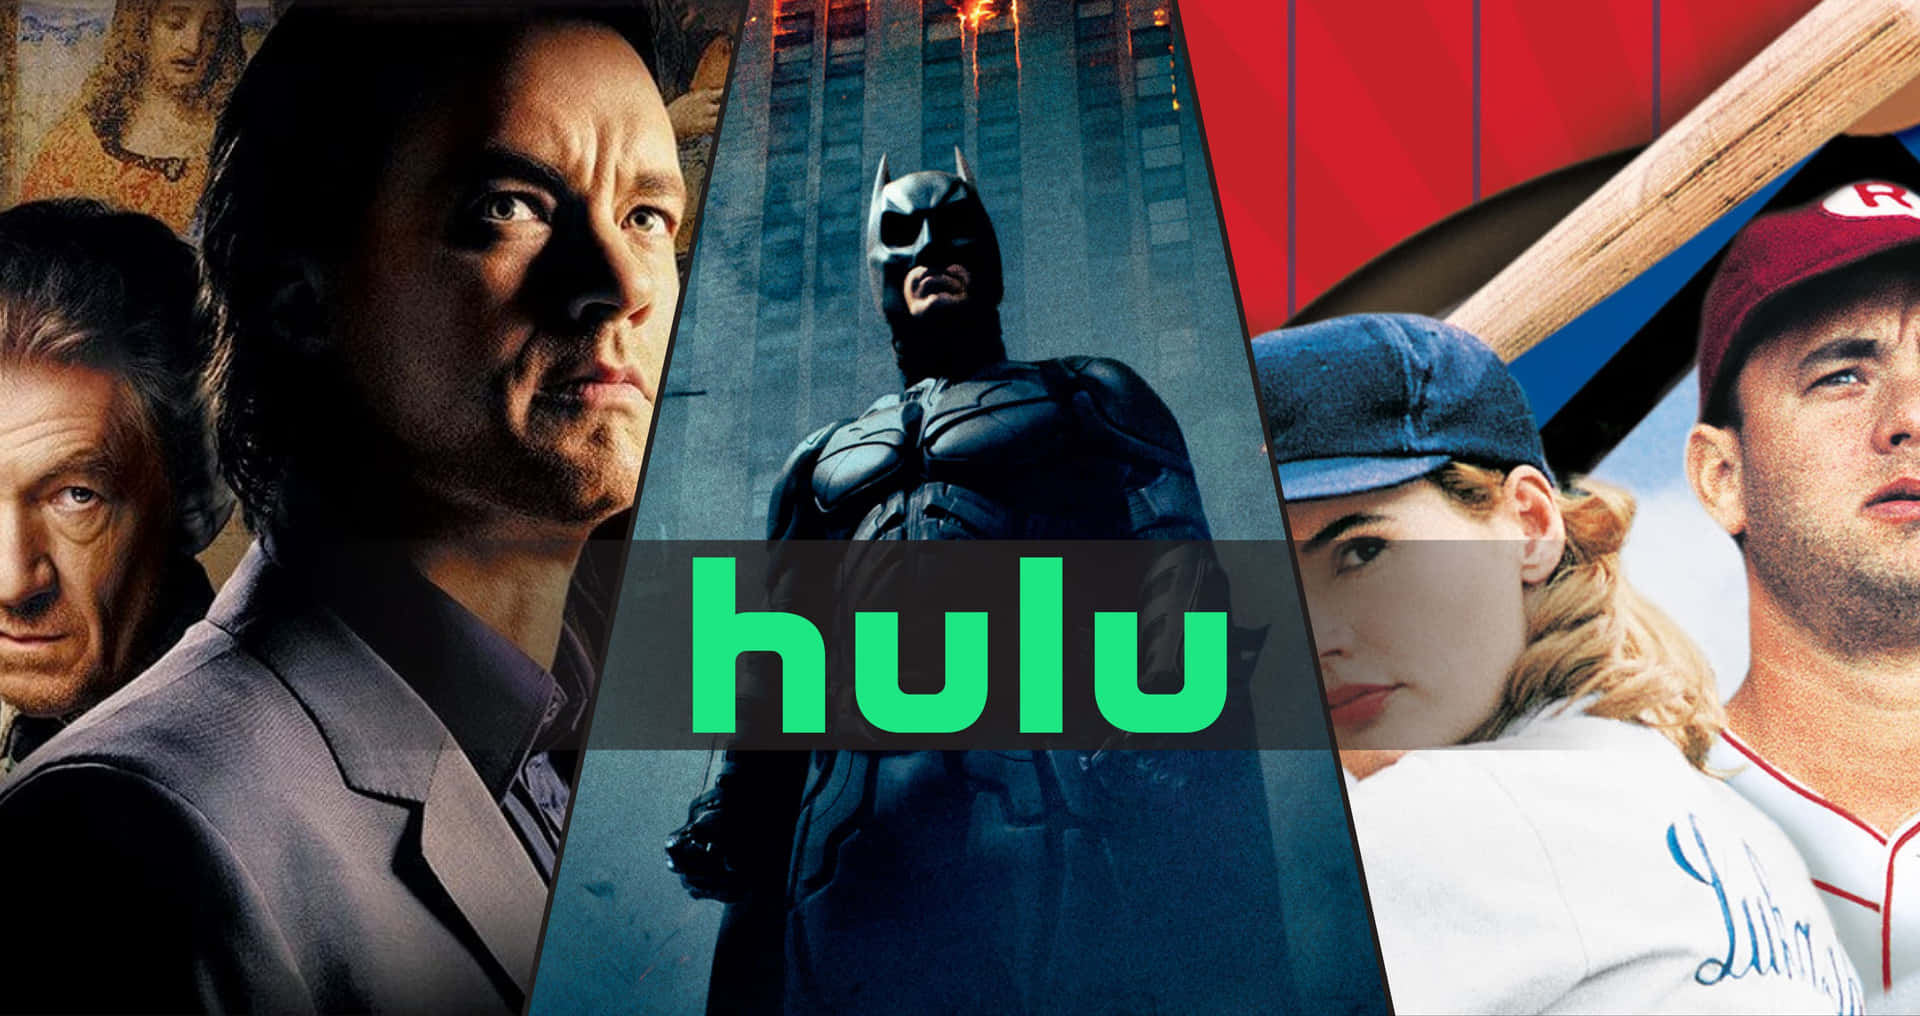 Award-winning shows and movies on Hulu - Watch now!